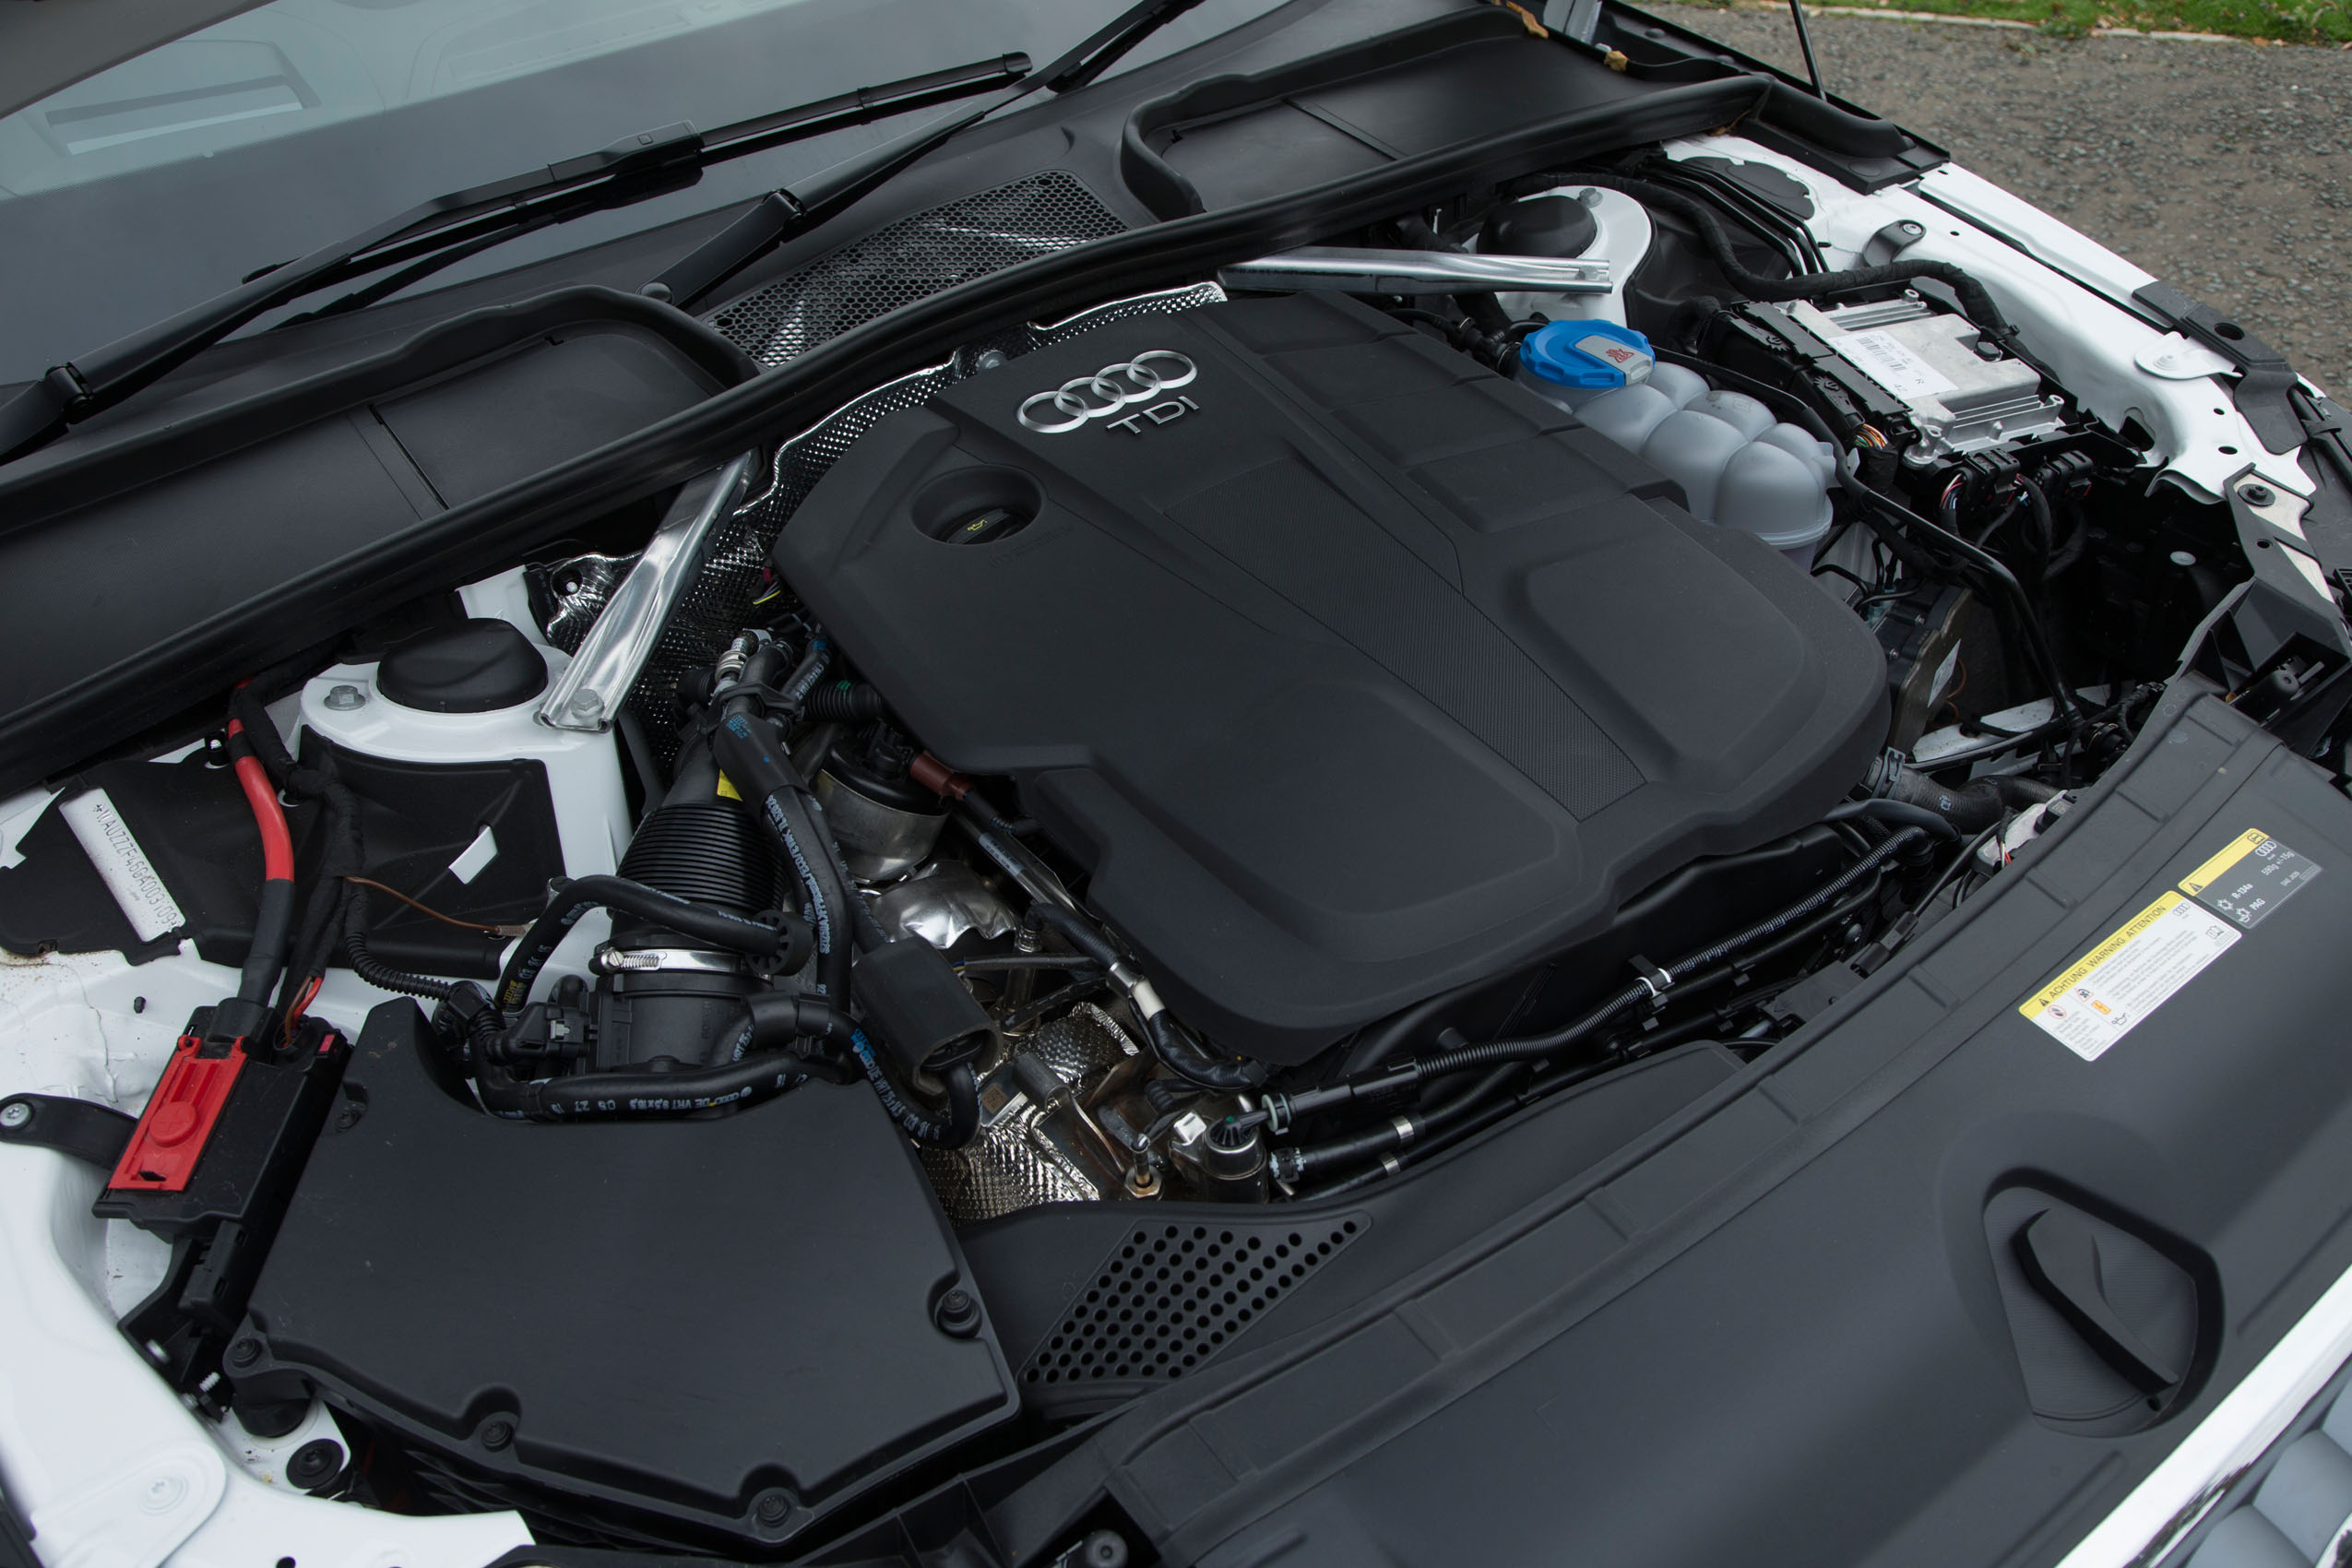 2.0-litre Audi A4 diesel engine